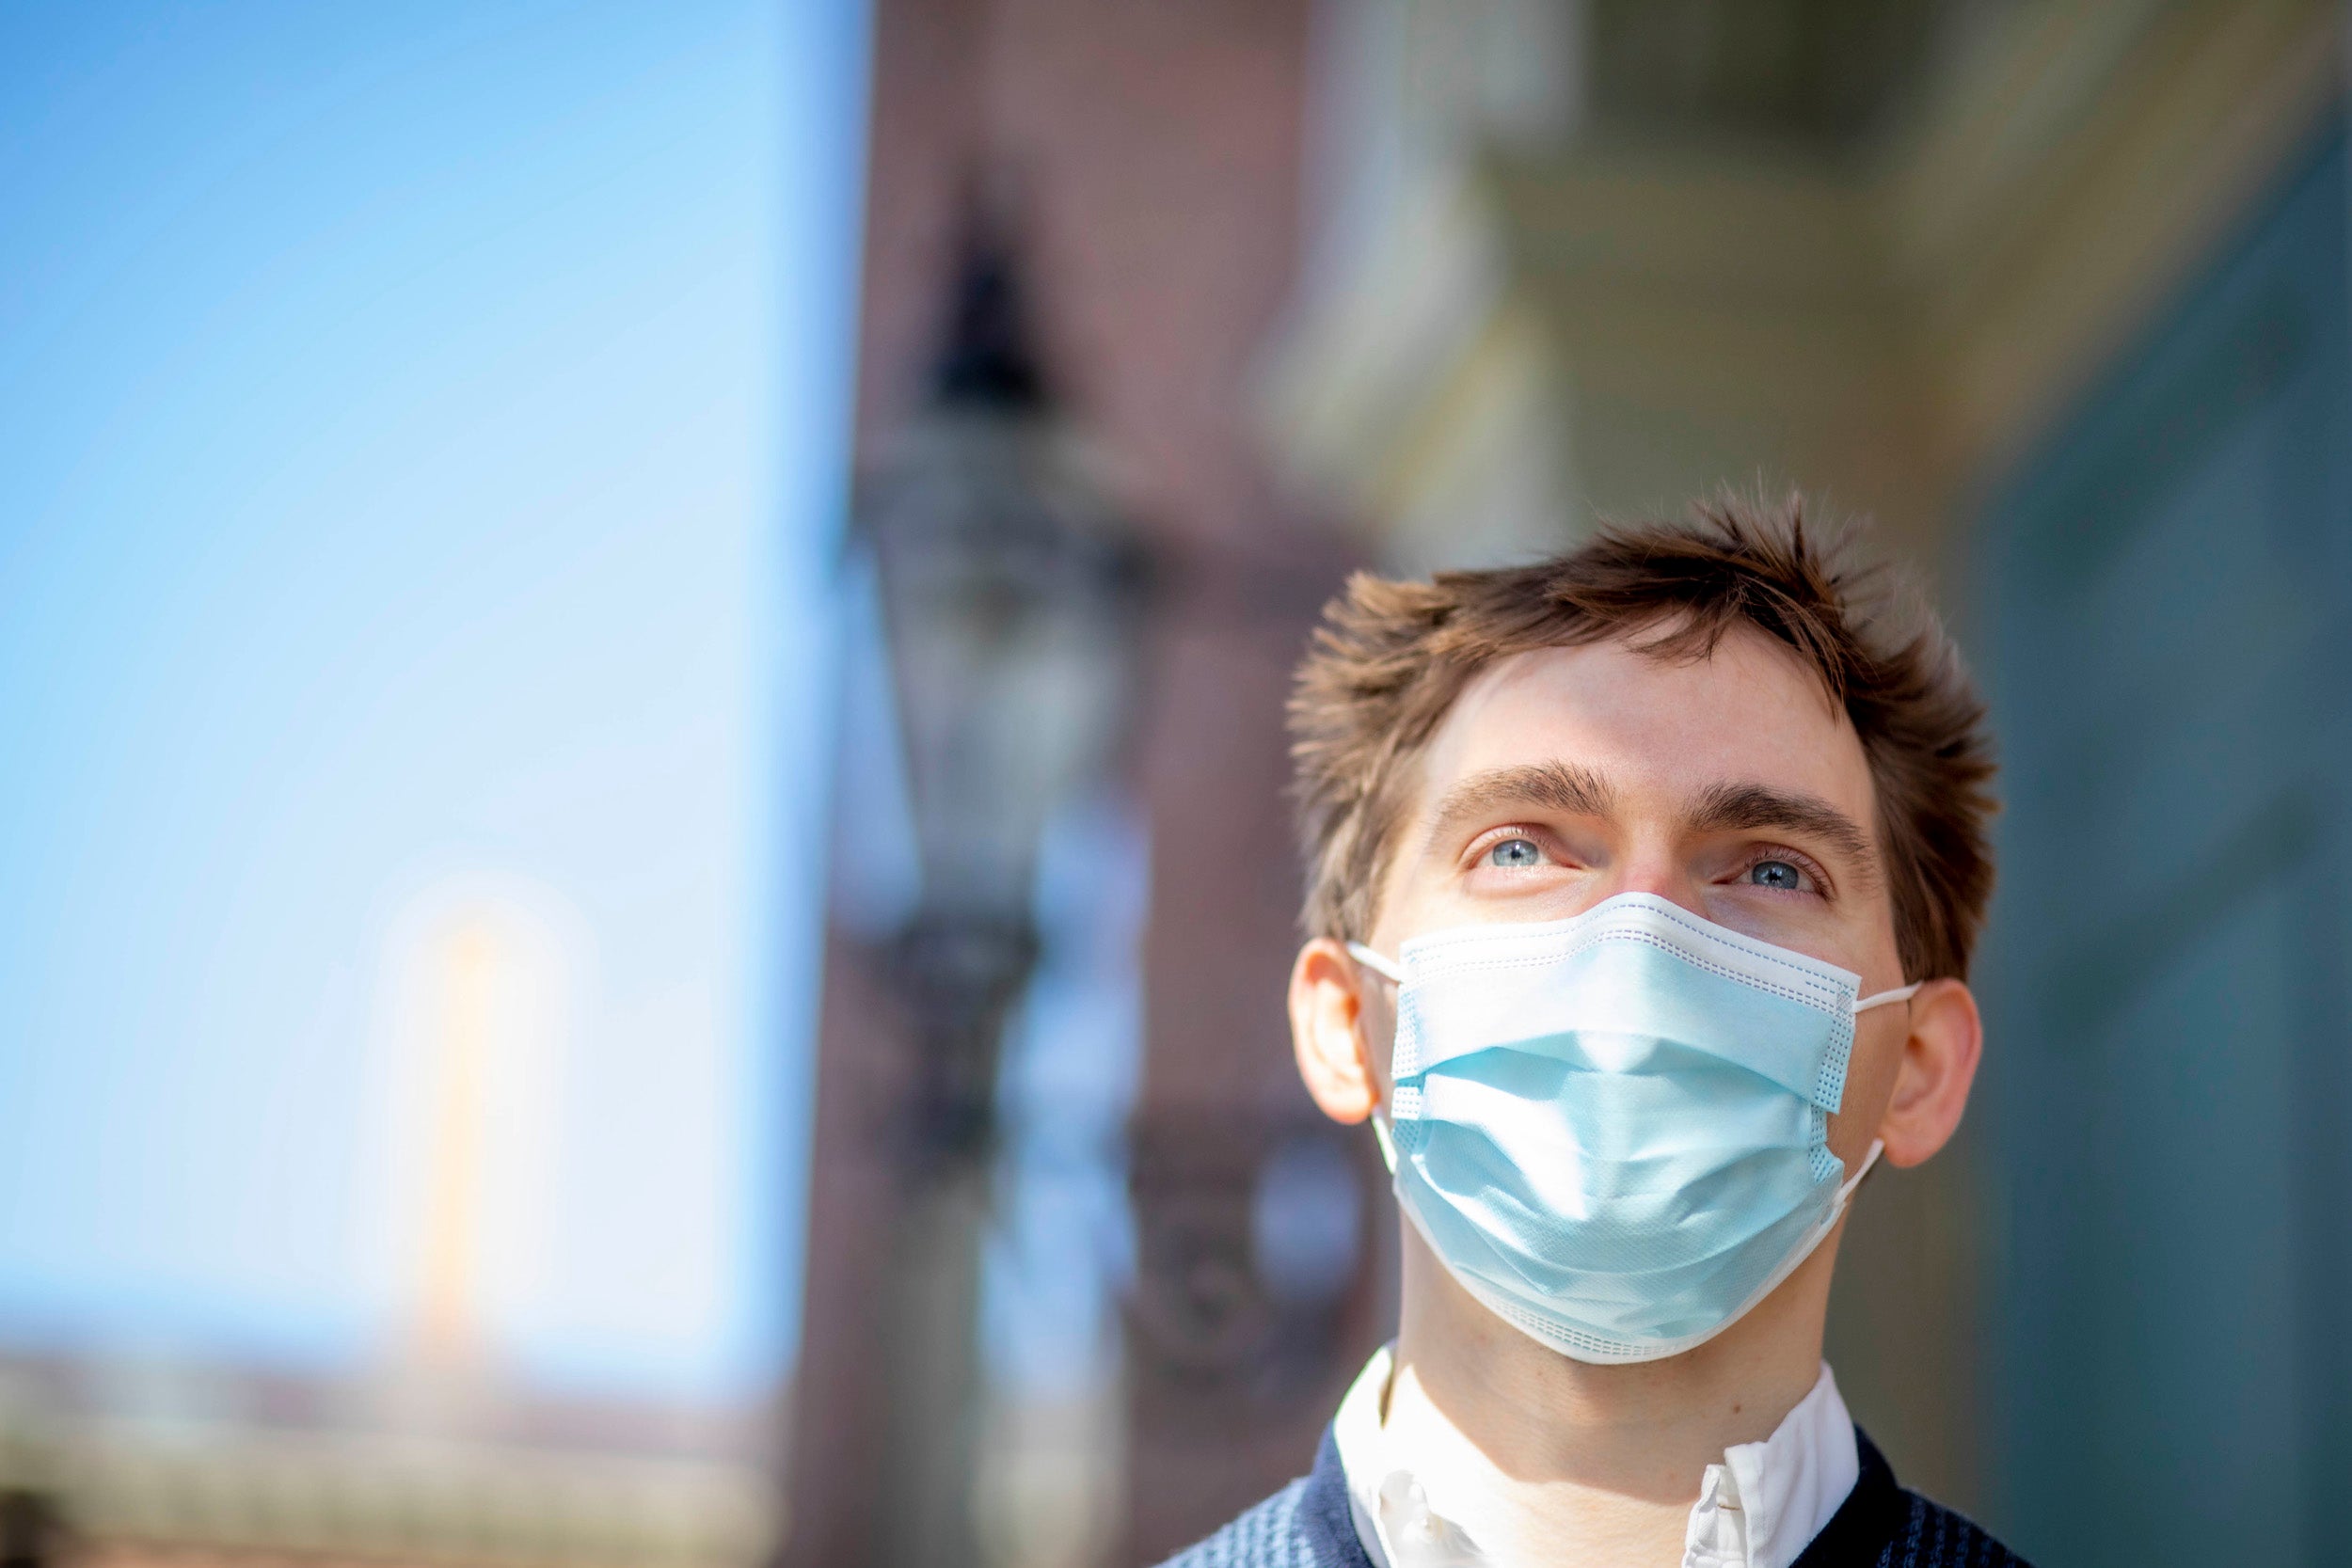 Harvard University Medical School student Grant Schleifer is pictured.